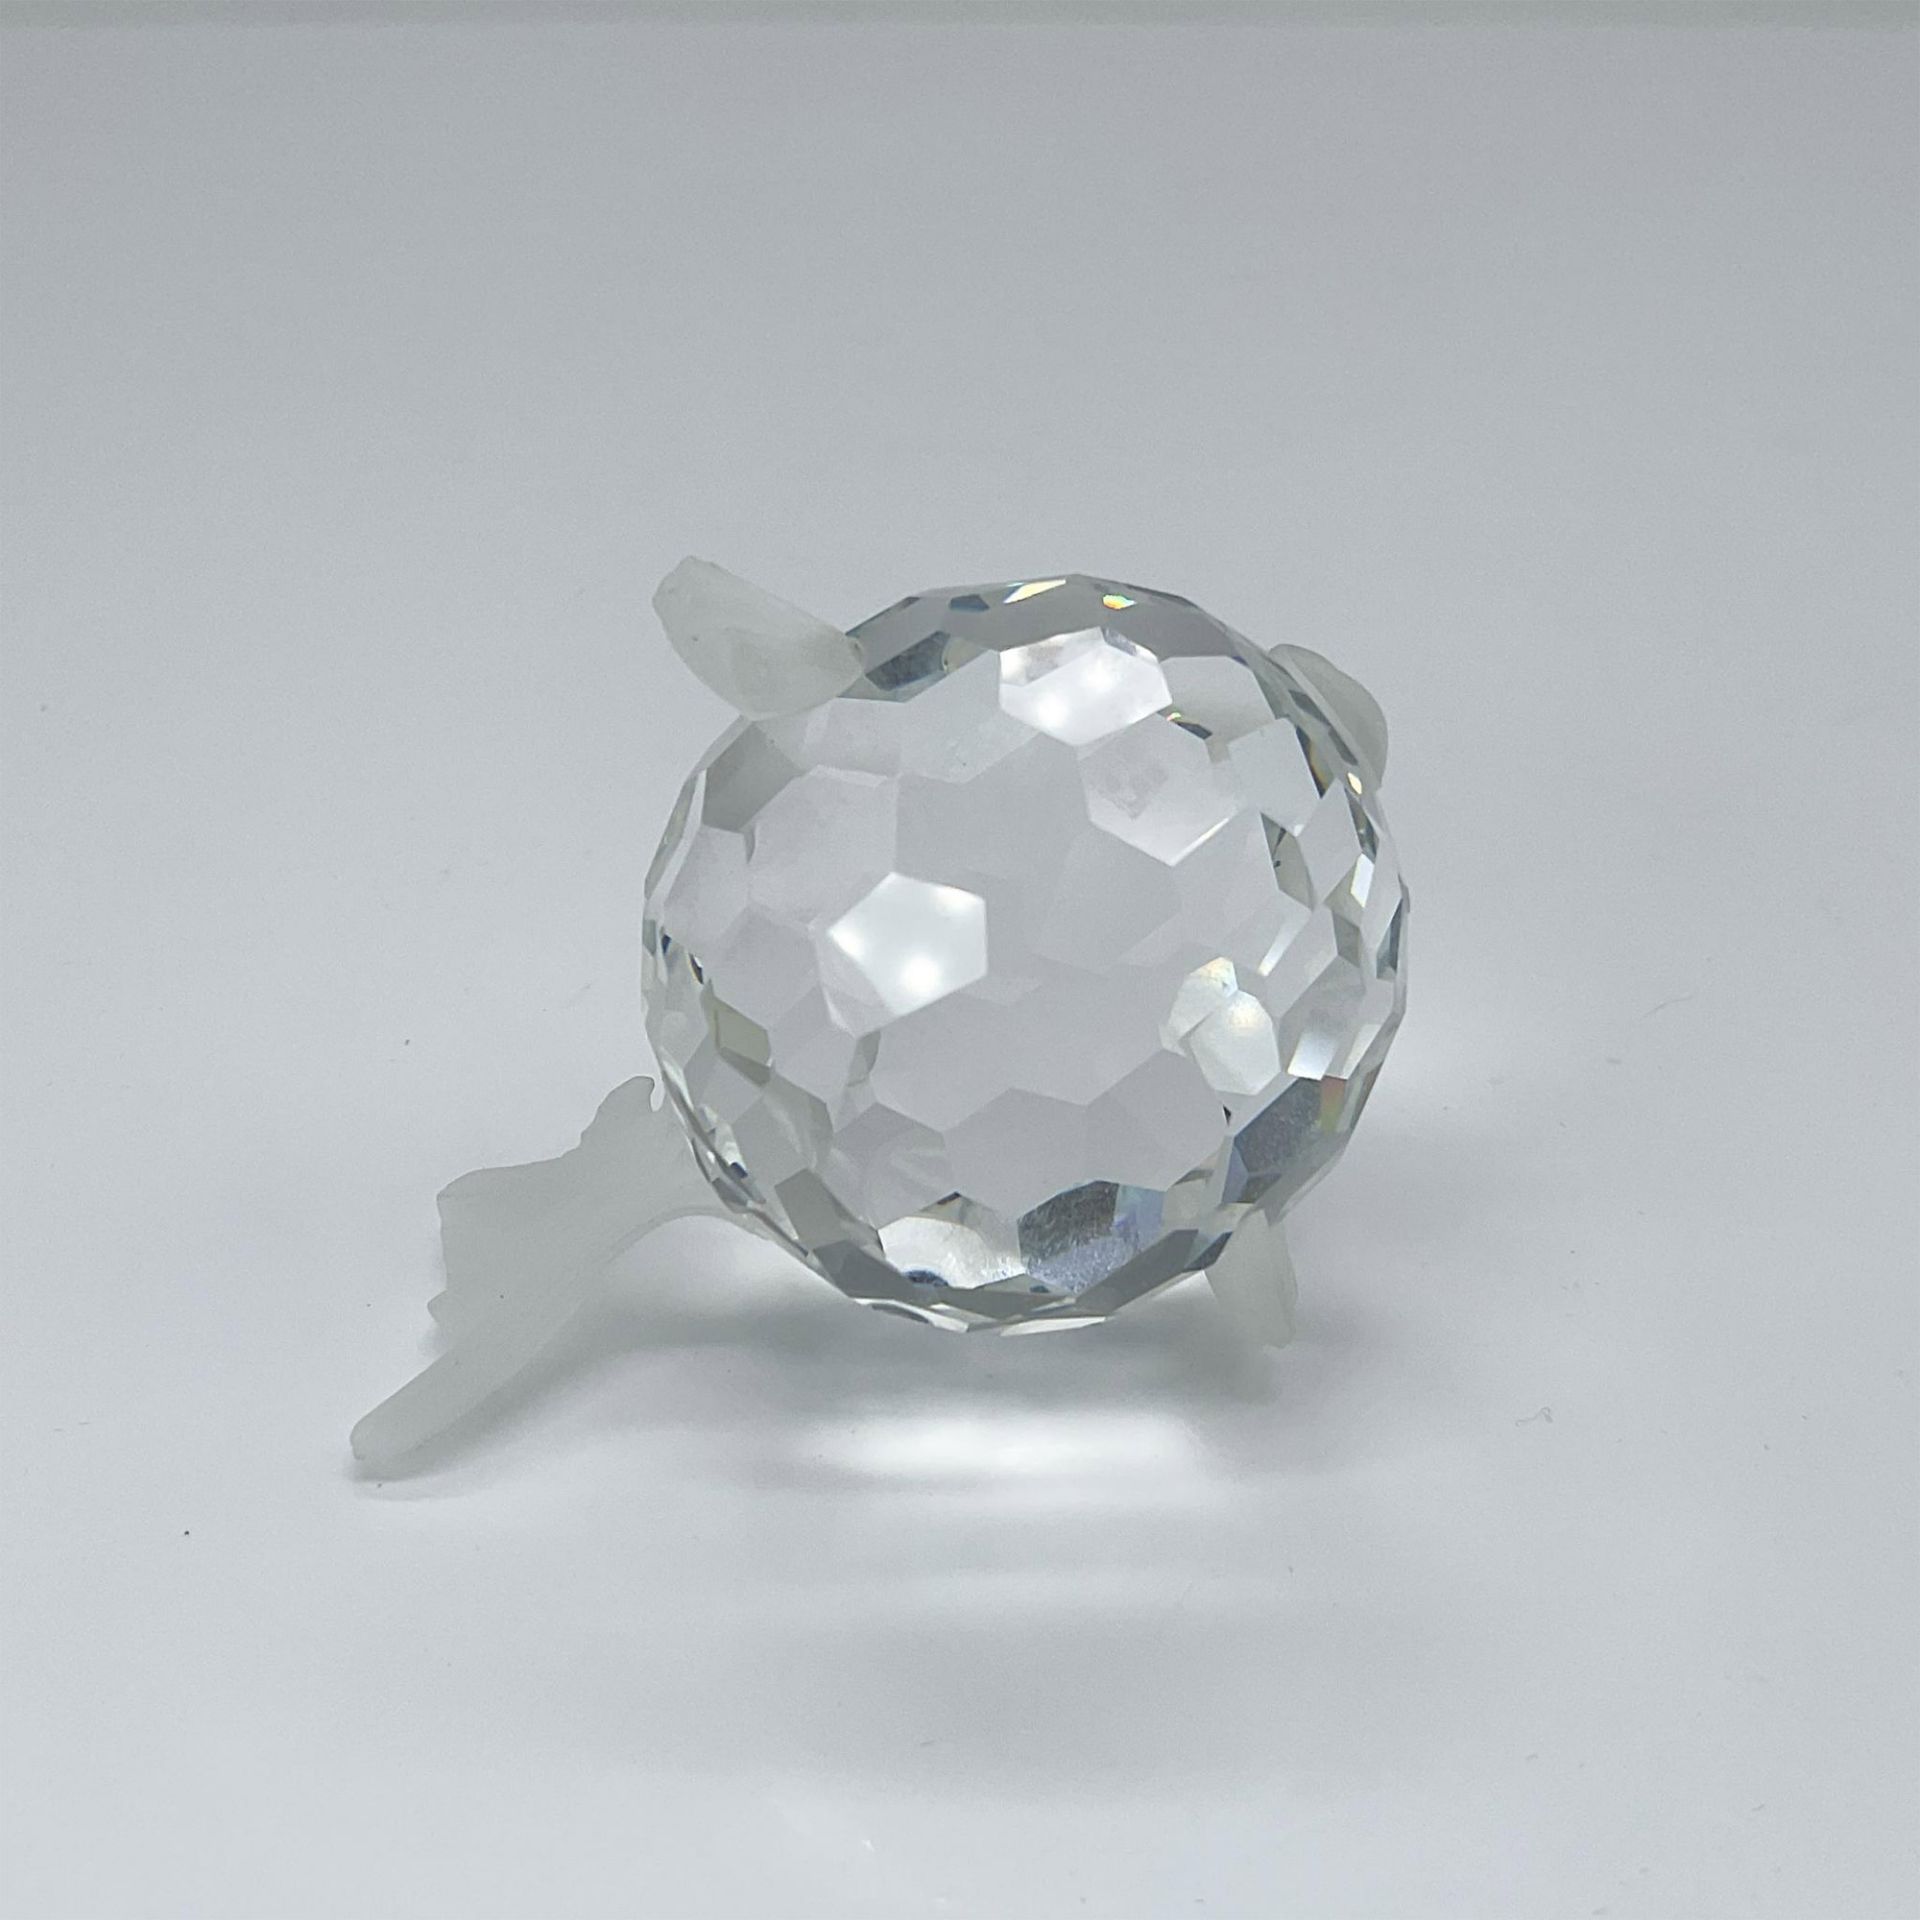 Swarovski Crystal Figurine, Blowfish - Image 3 of 3